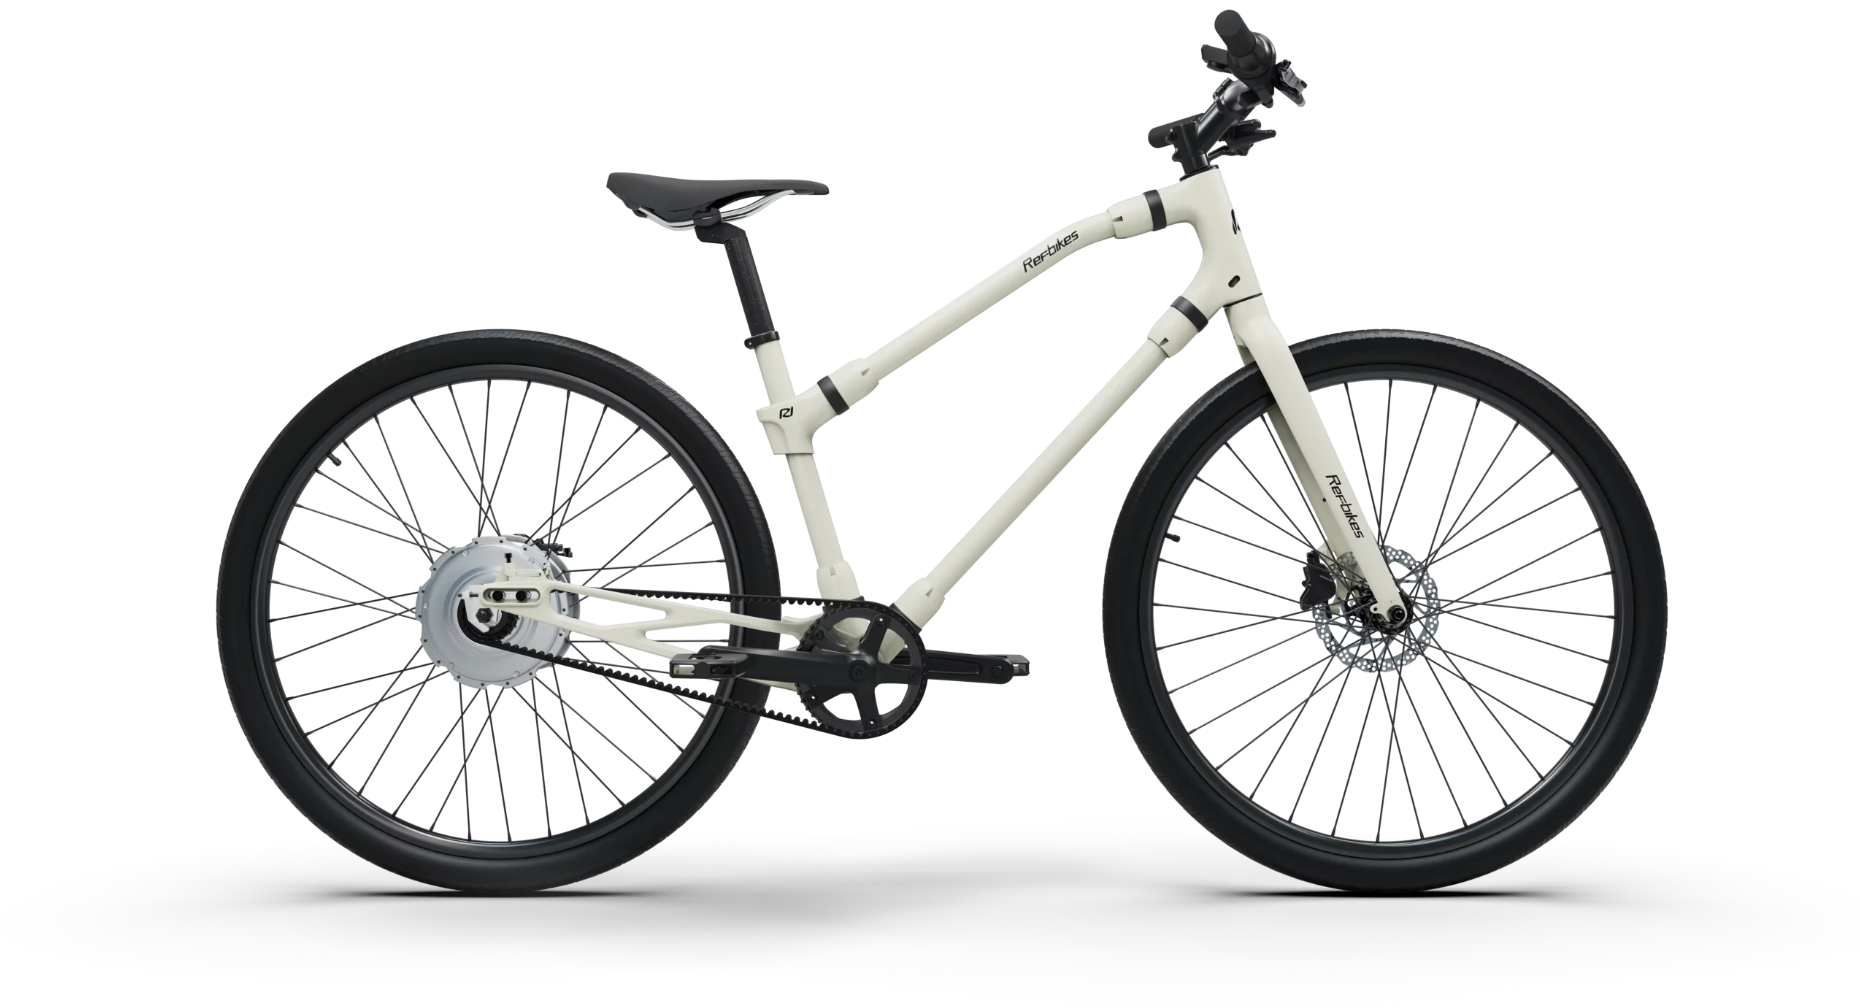 Ivory white Essential Boost bike side view, showcasing its modern design.